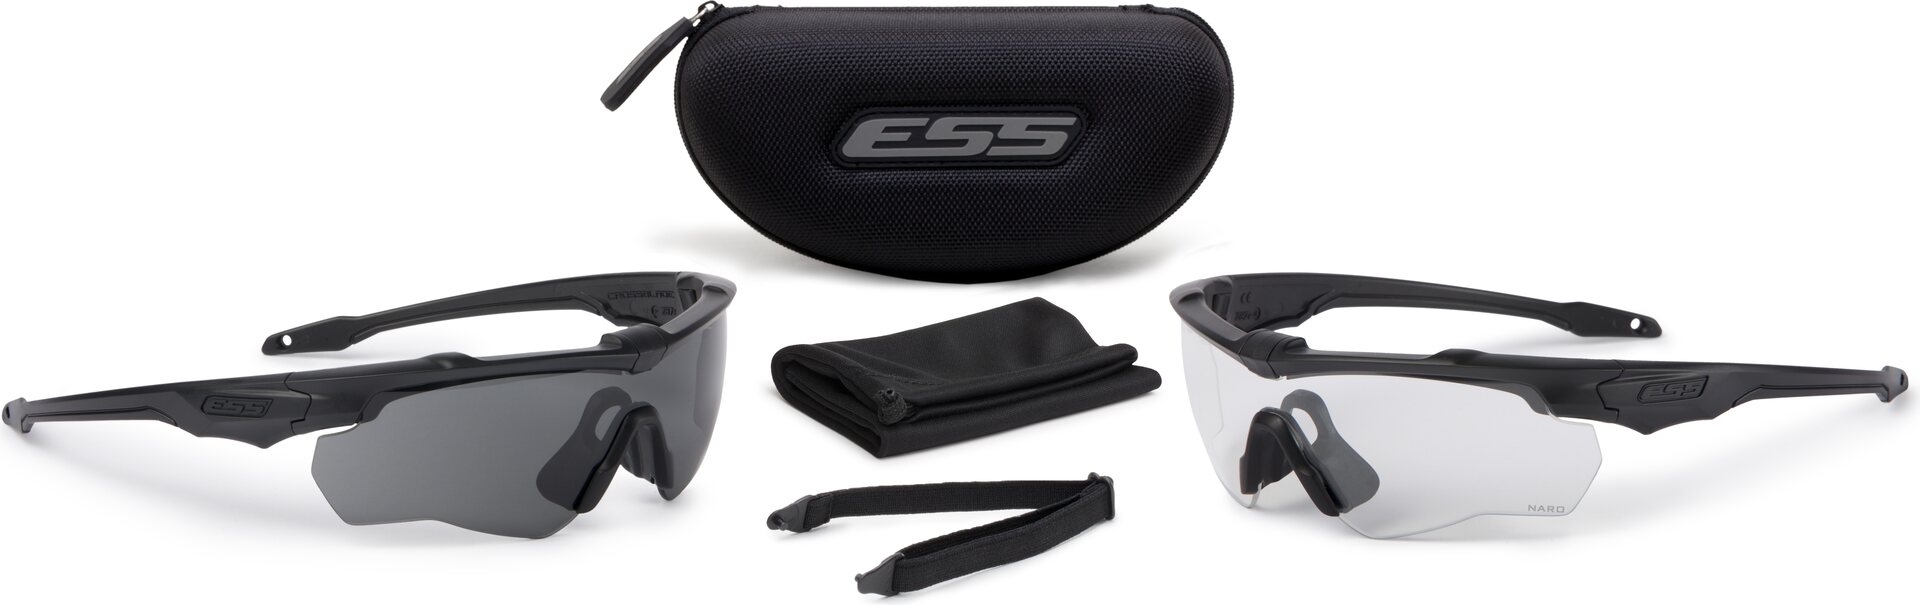 Ess Sunglasses Crossblade 2x Naro Kit Black with Clear/Smoke Gray Lens